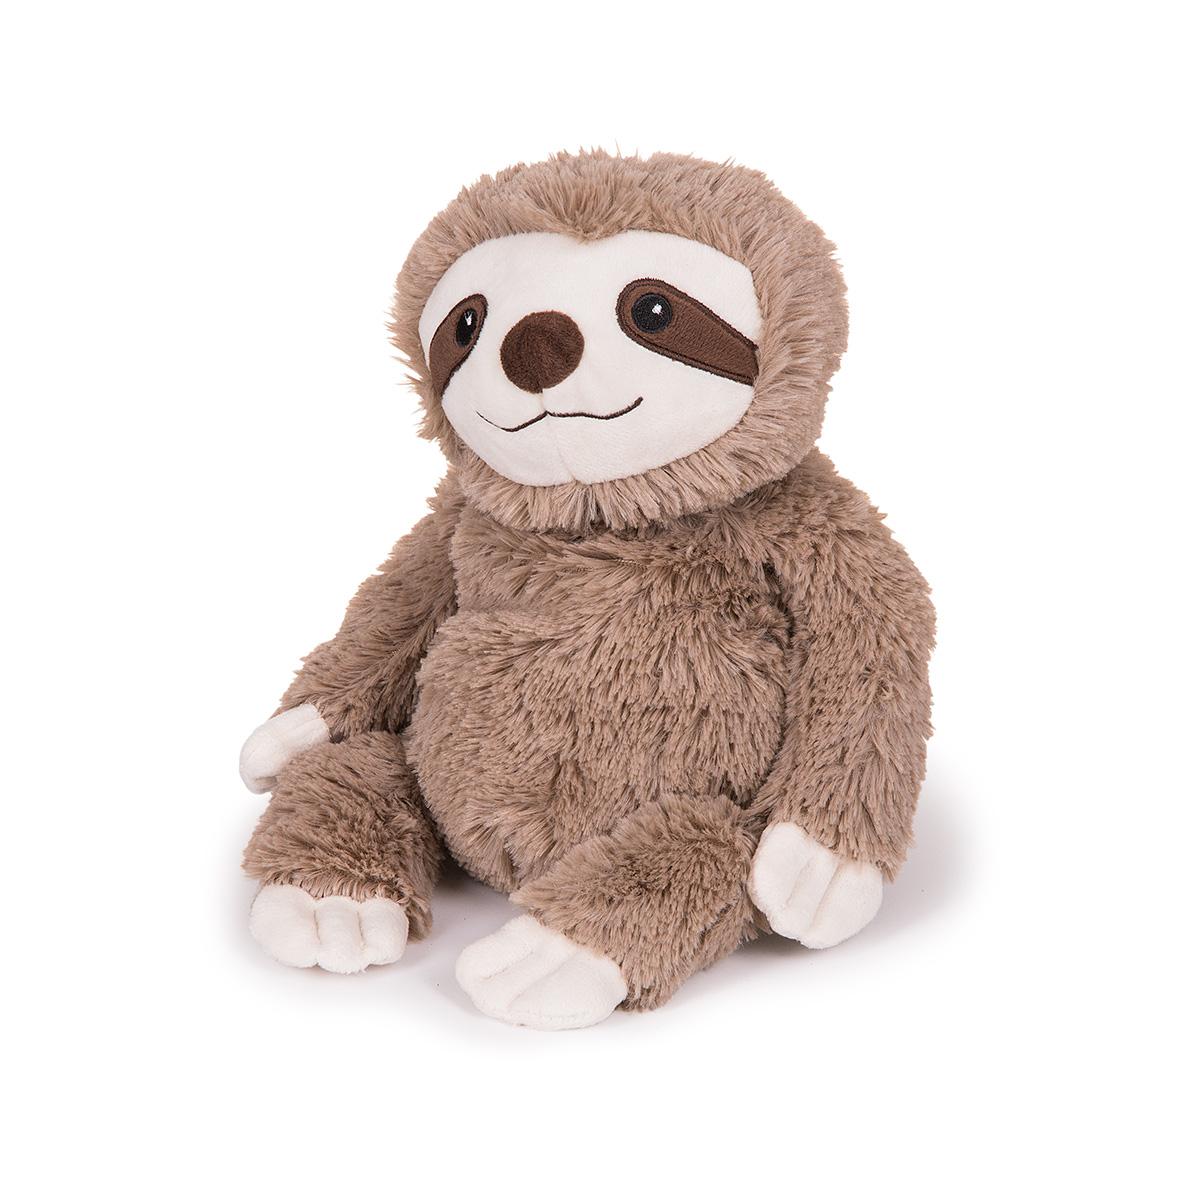 warmies sloth